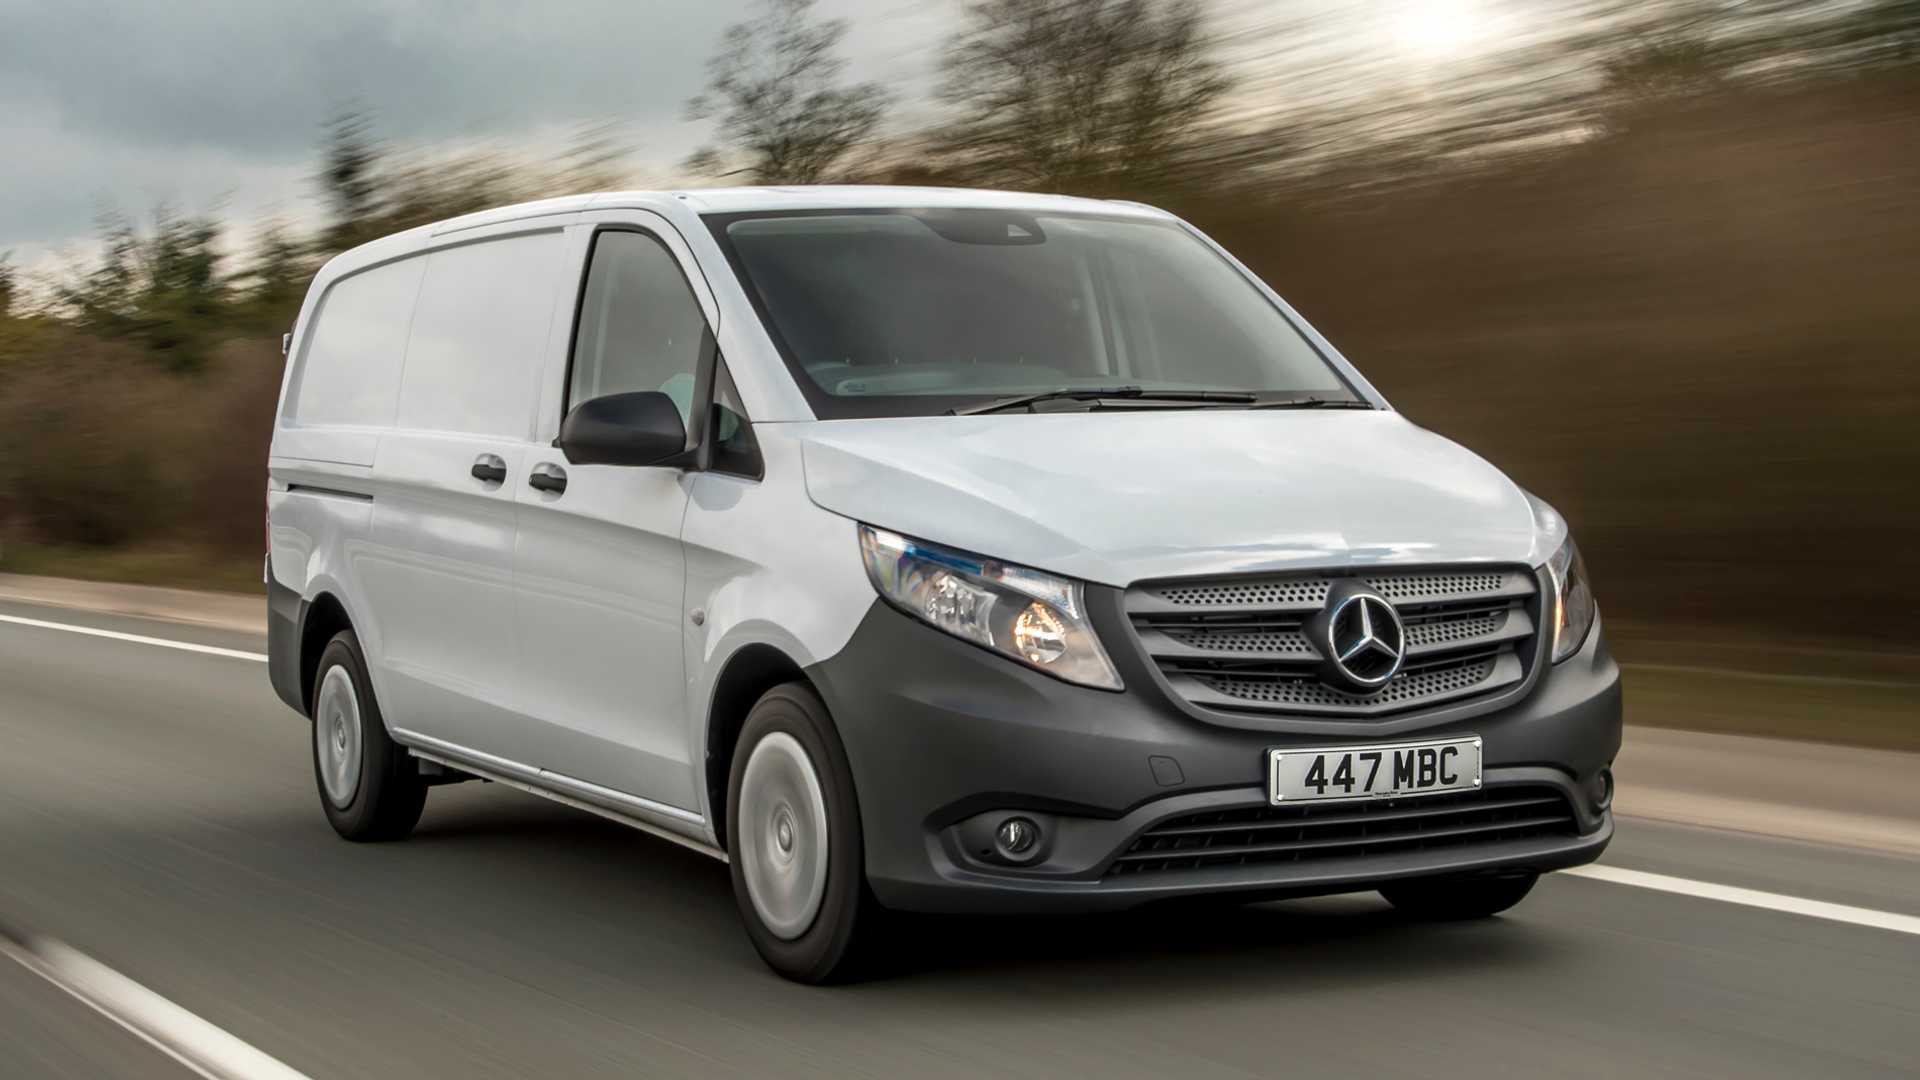 2019 Mercedes Vito panel van starts from £23,900